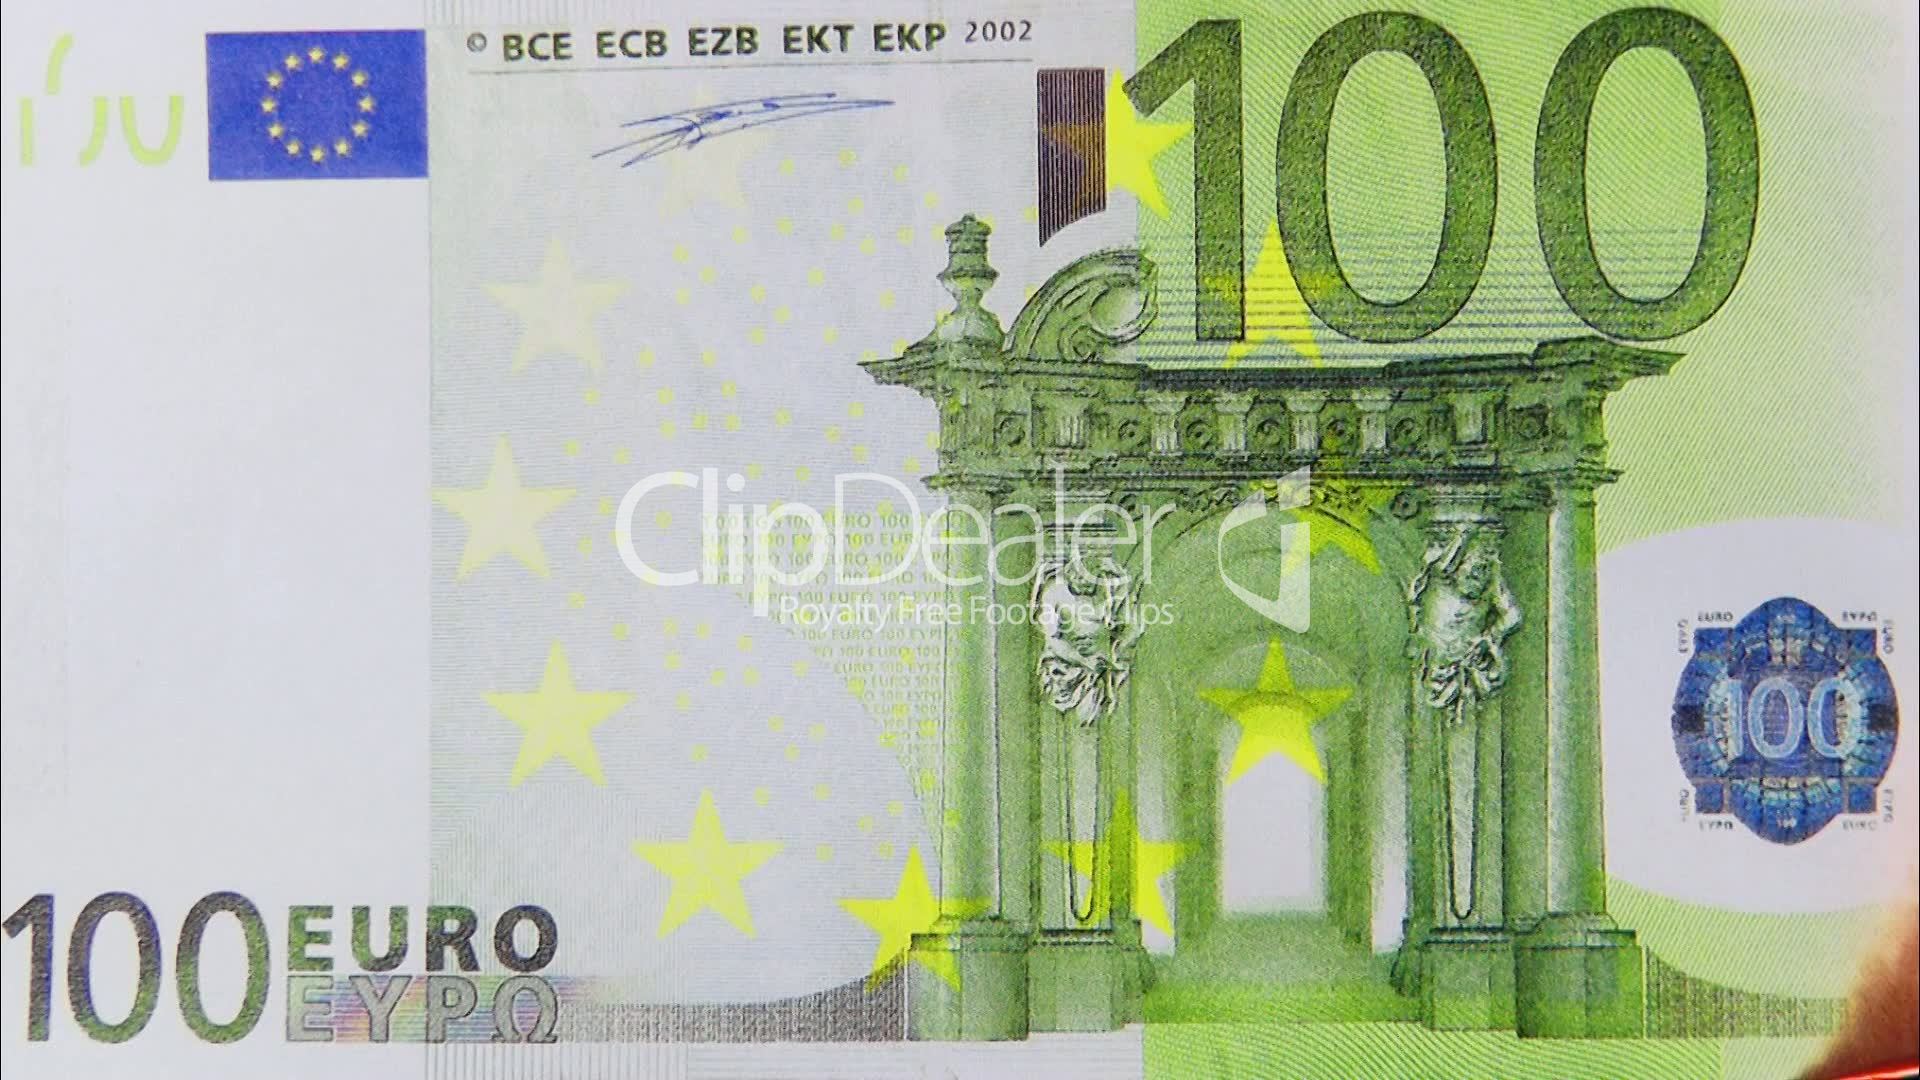 100 Euro Schein brennt ab - 100 Euro burning: Royalty-free video and ...